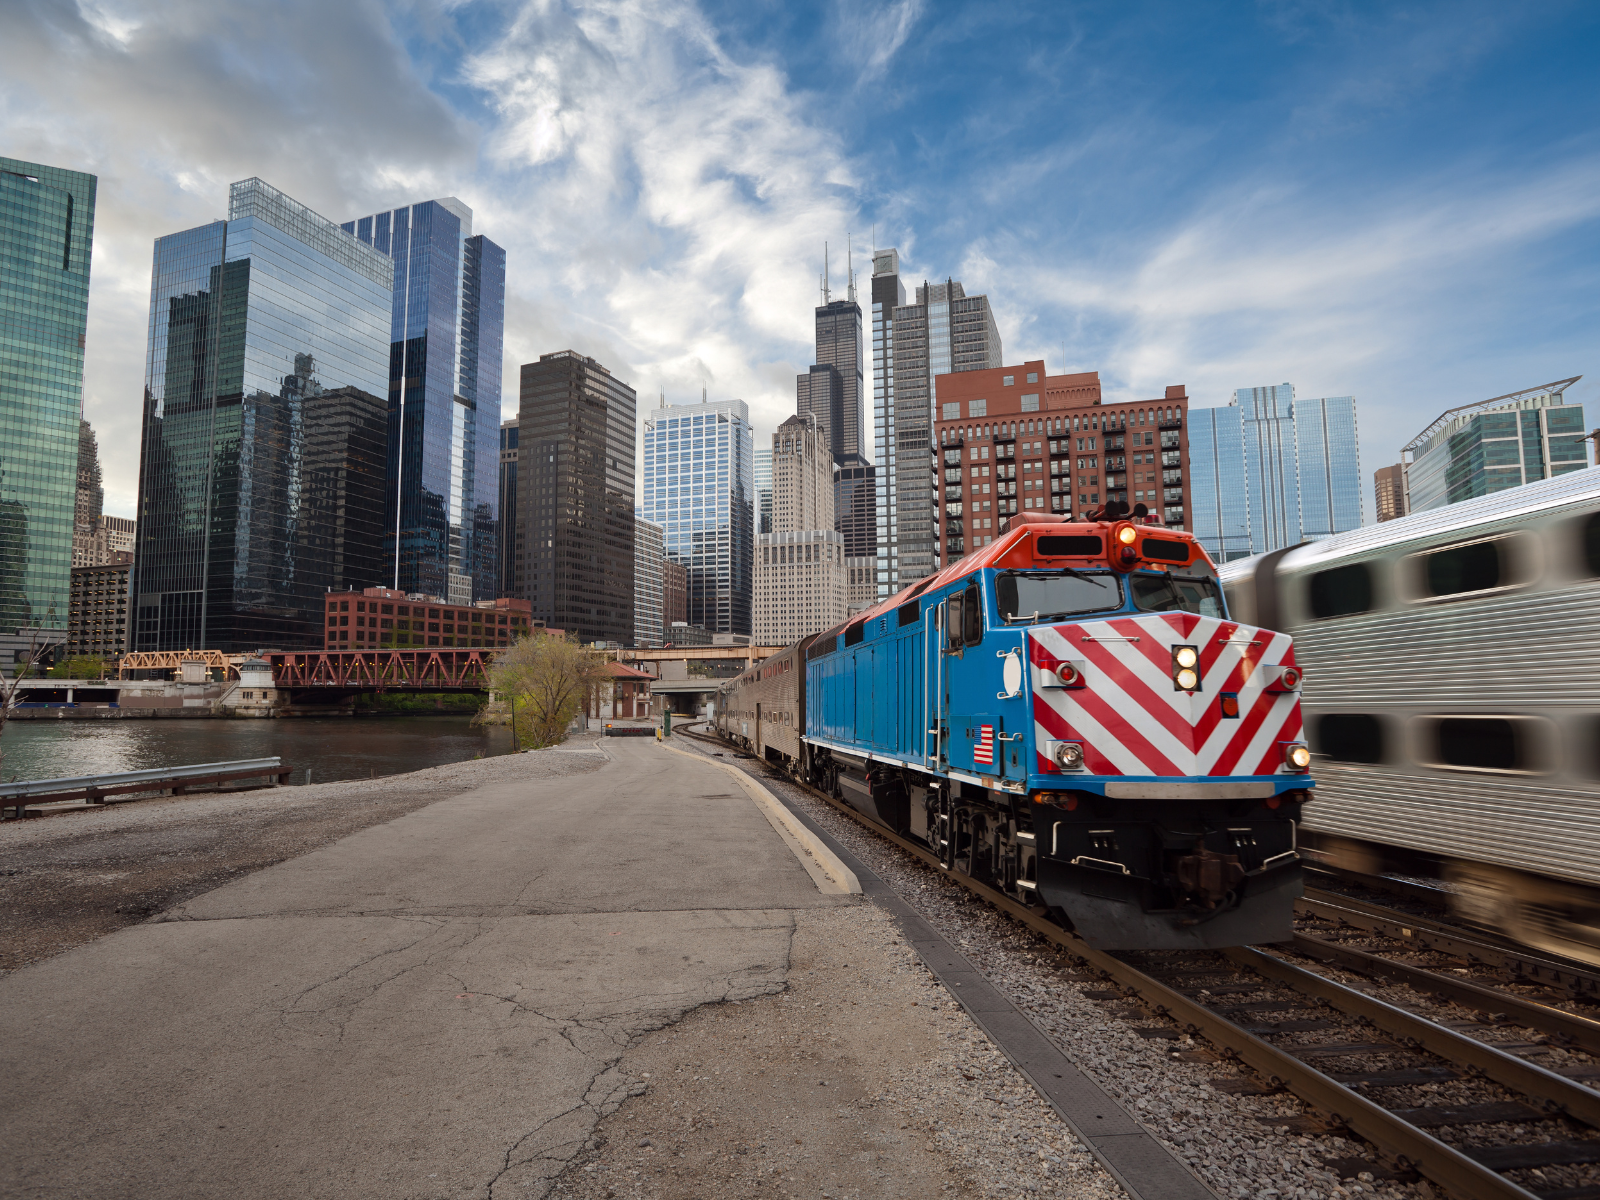 Metra's commuter rail service in the Chicago metropolitan area